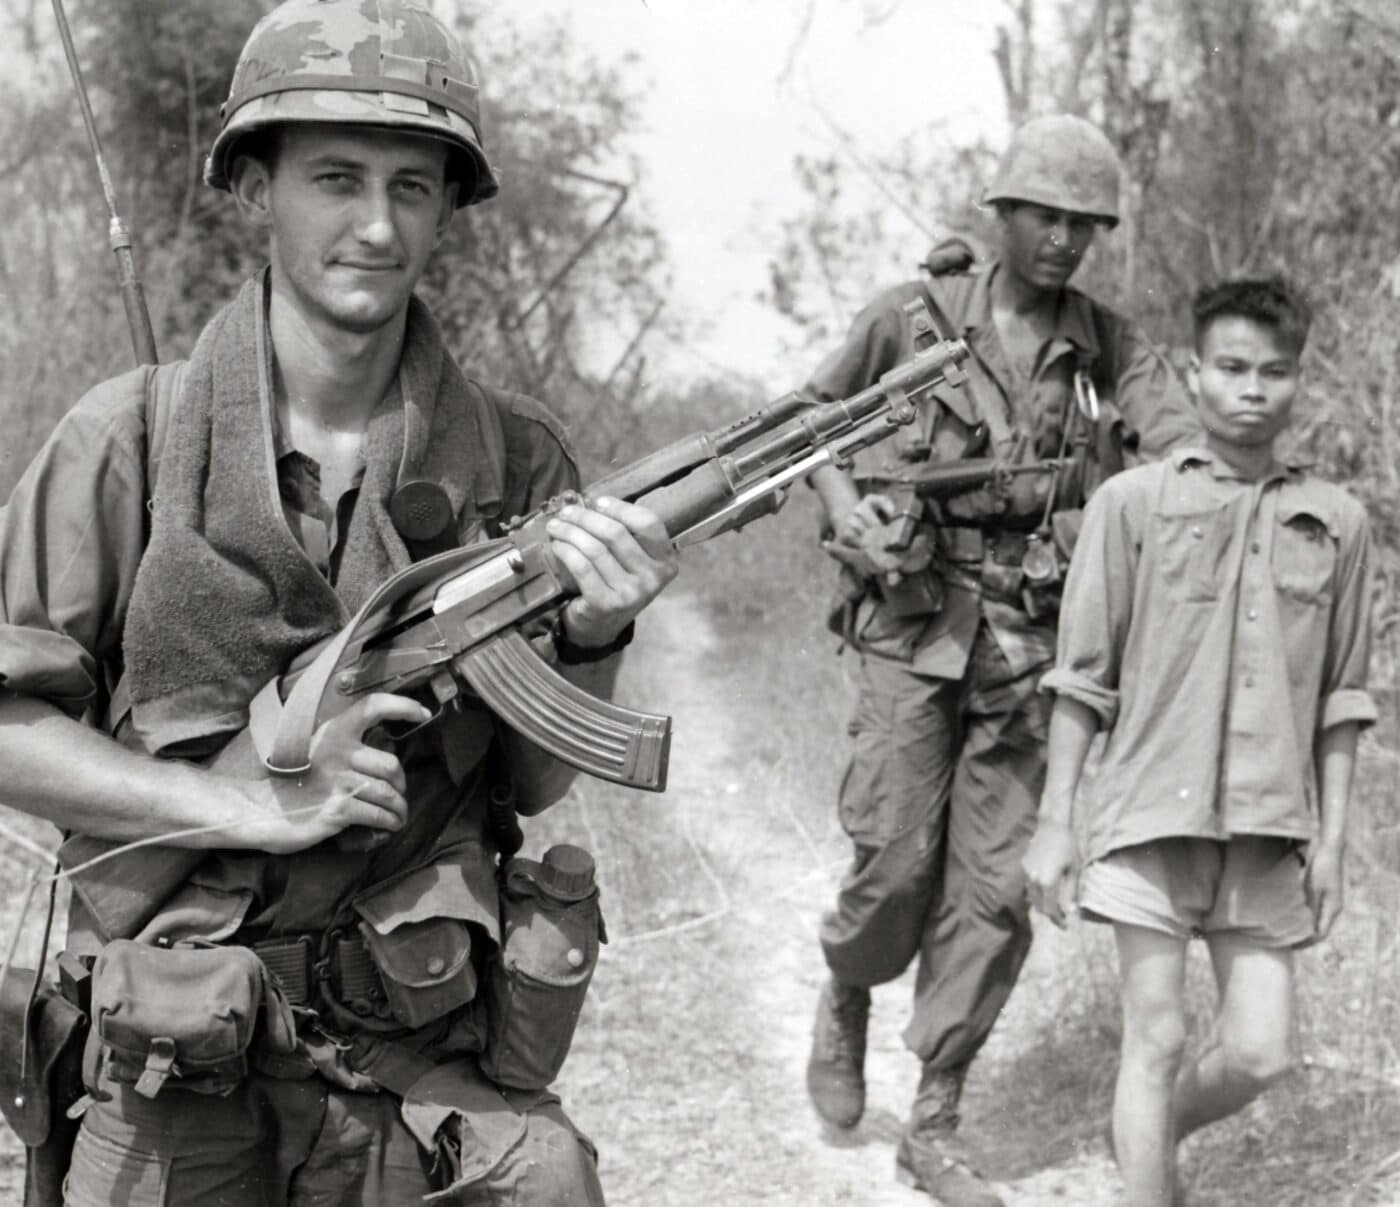 Captured Type 56 rifle in the hands of soldier during Vietnam war